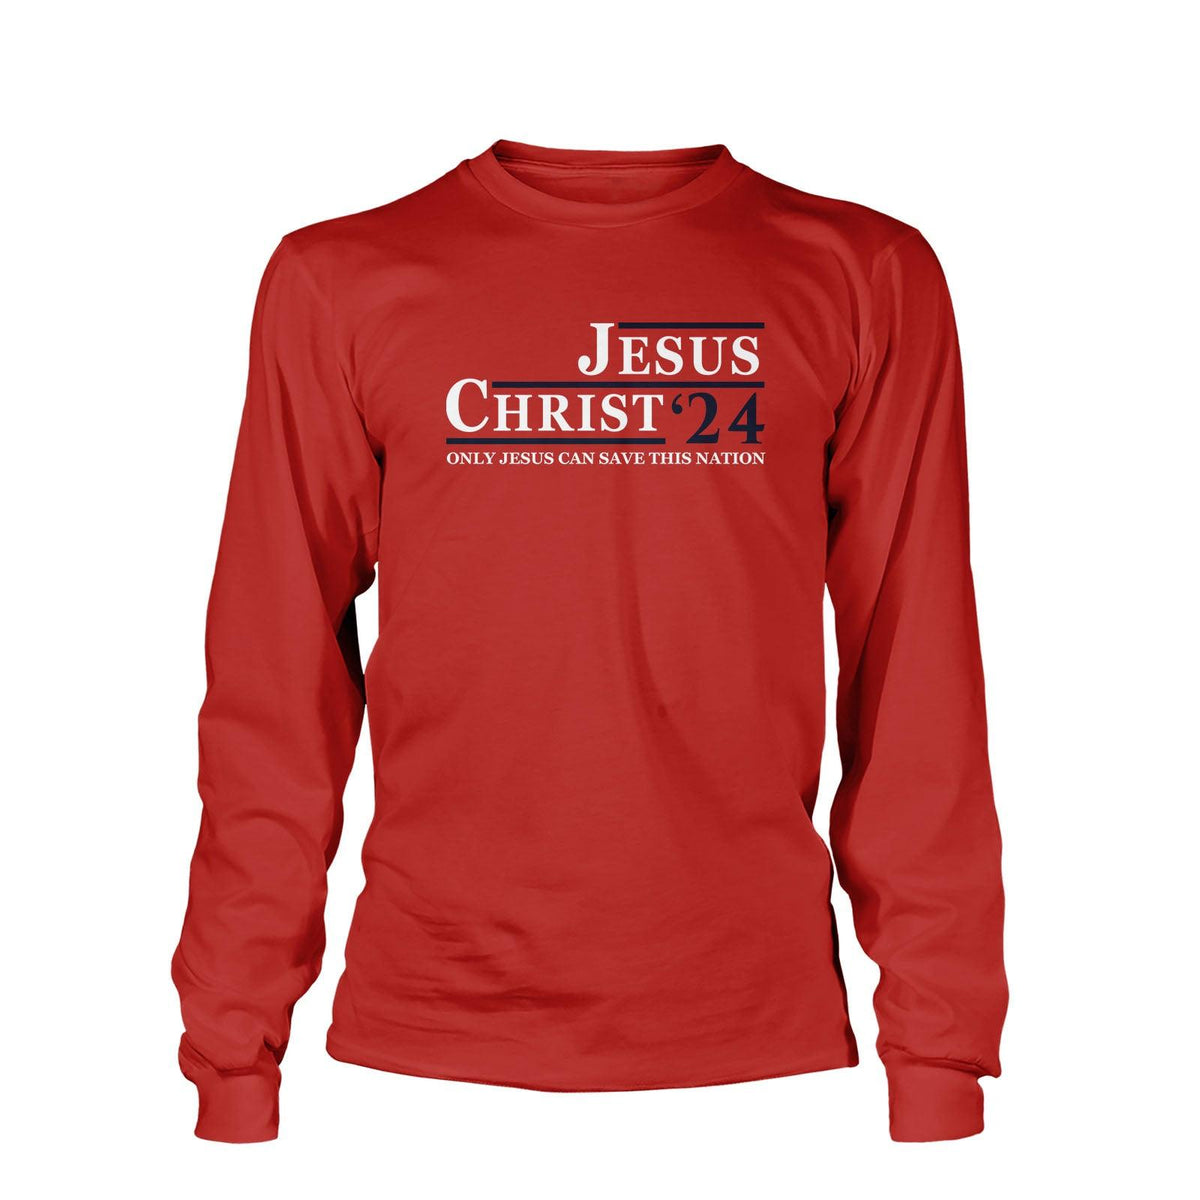 Jesus Christ'24 Long Sleeve T-Shirt - Our True God